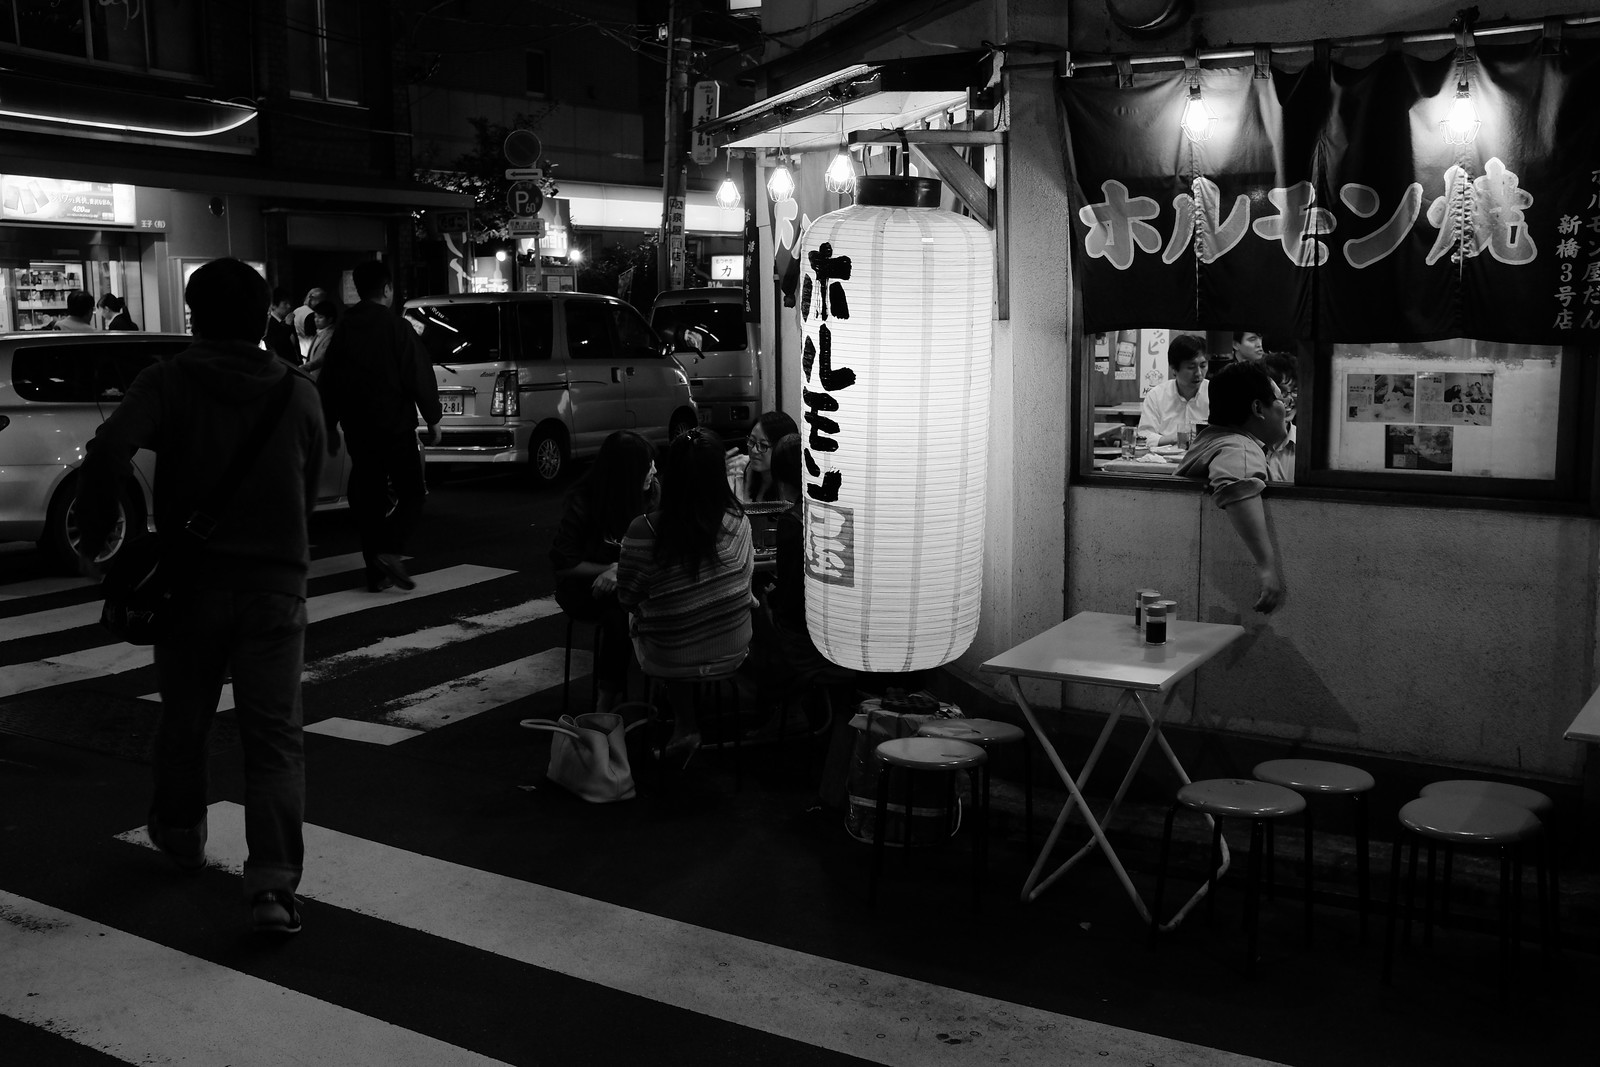 The night Shinbashi in Tokyo, Japan.